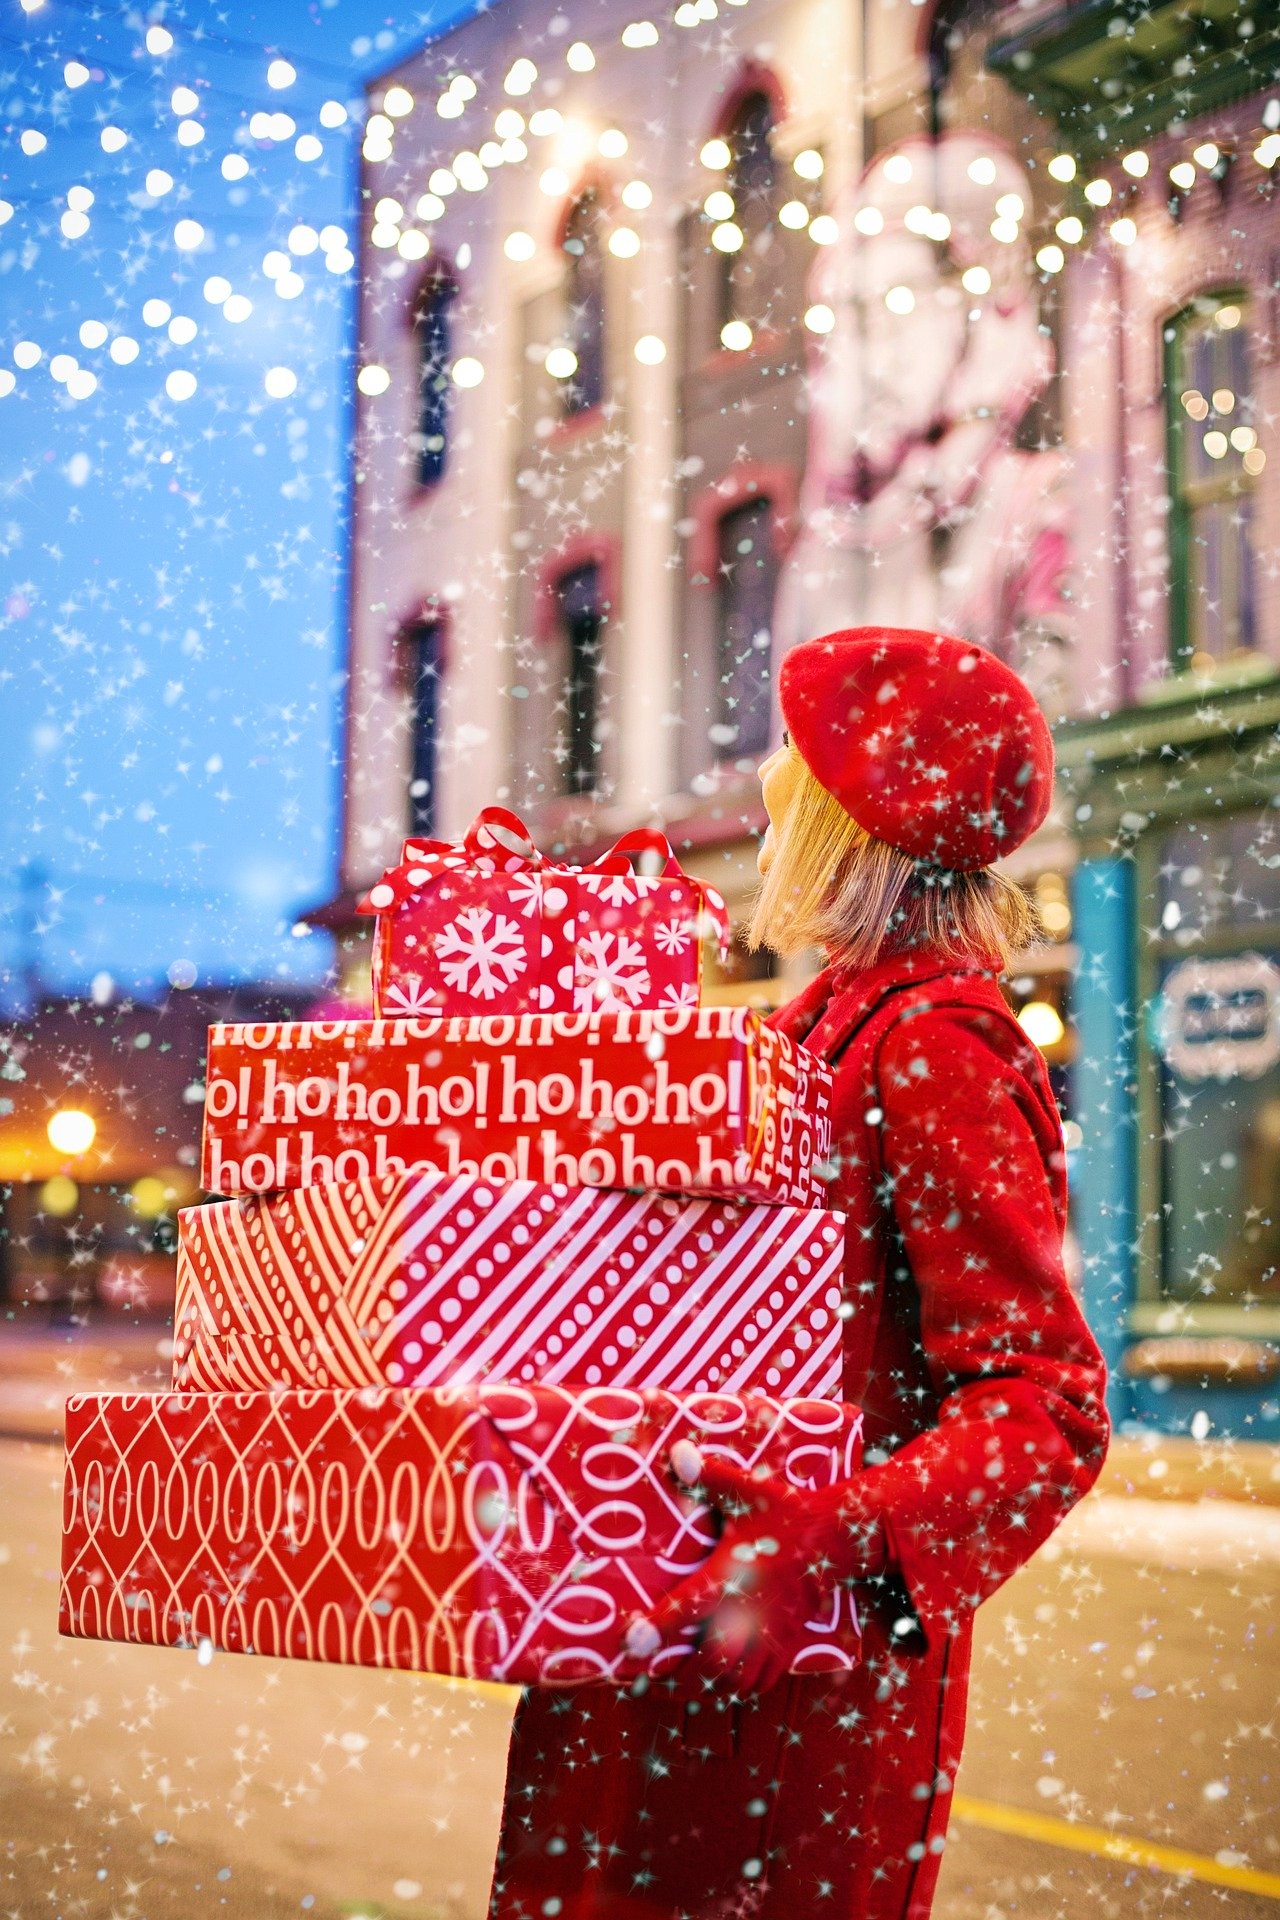 <img src="girl.jpg" alt="girl carrying self-care Christmas presents"/> 